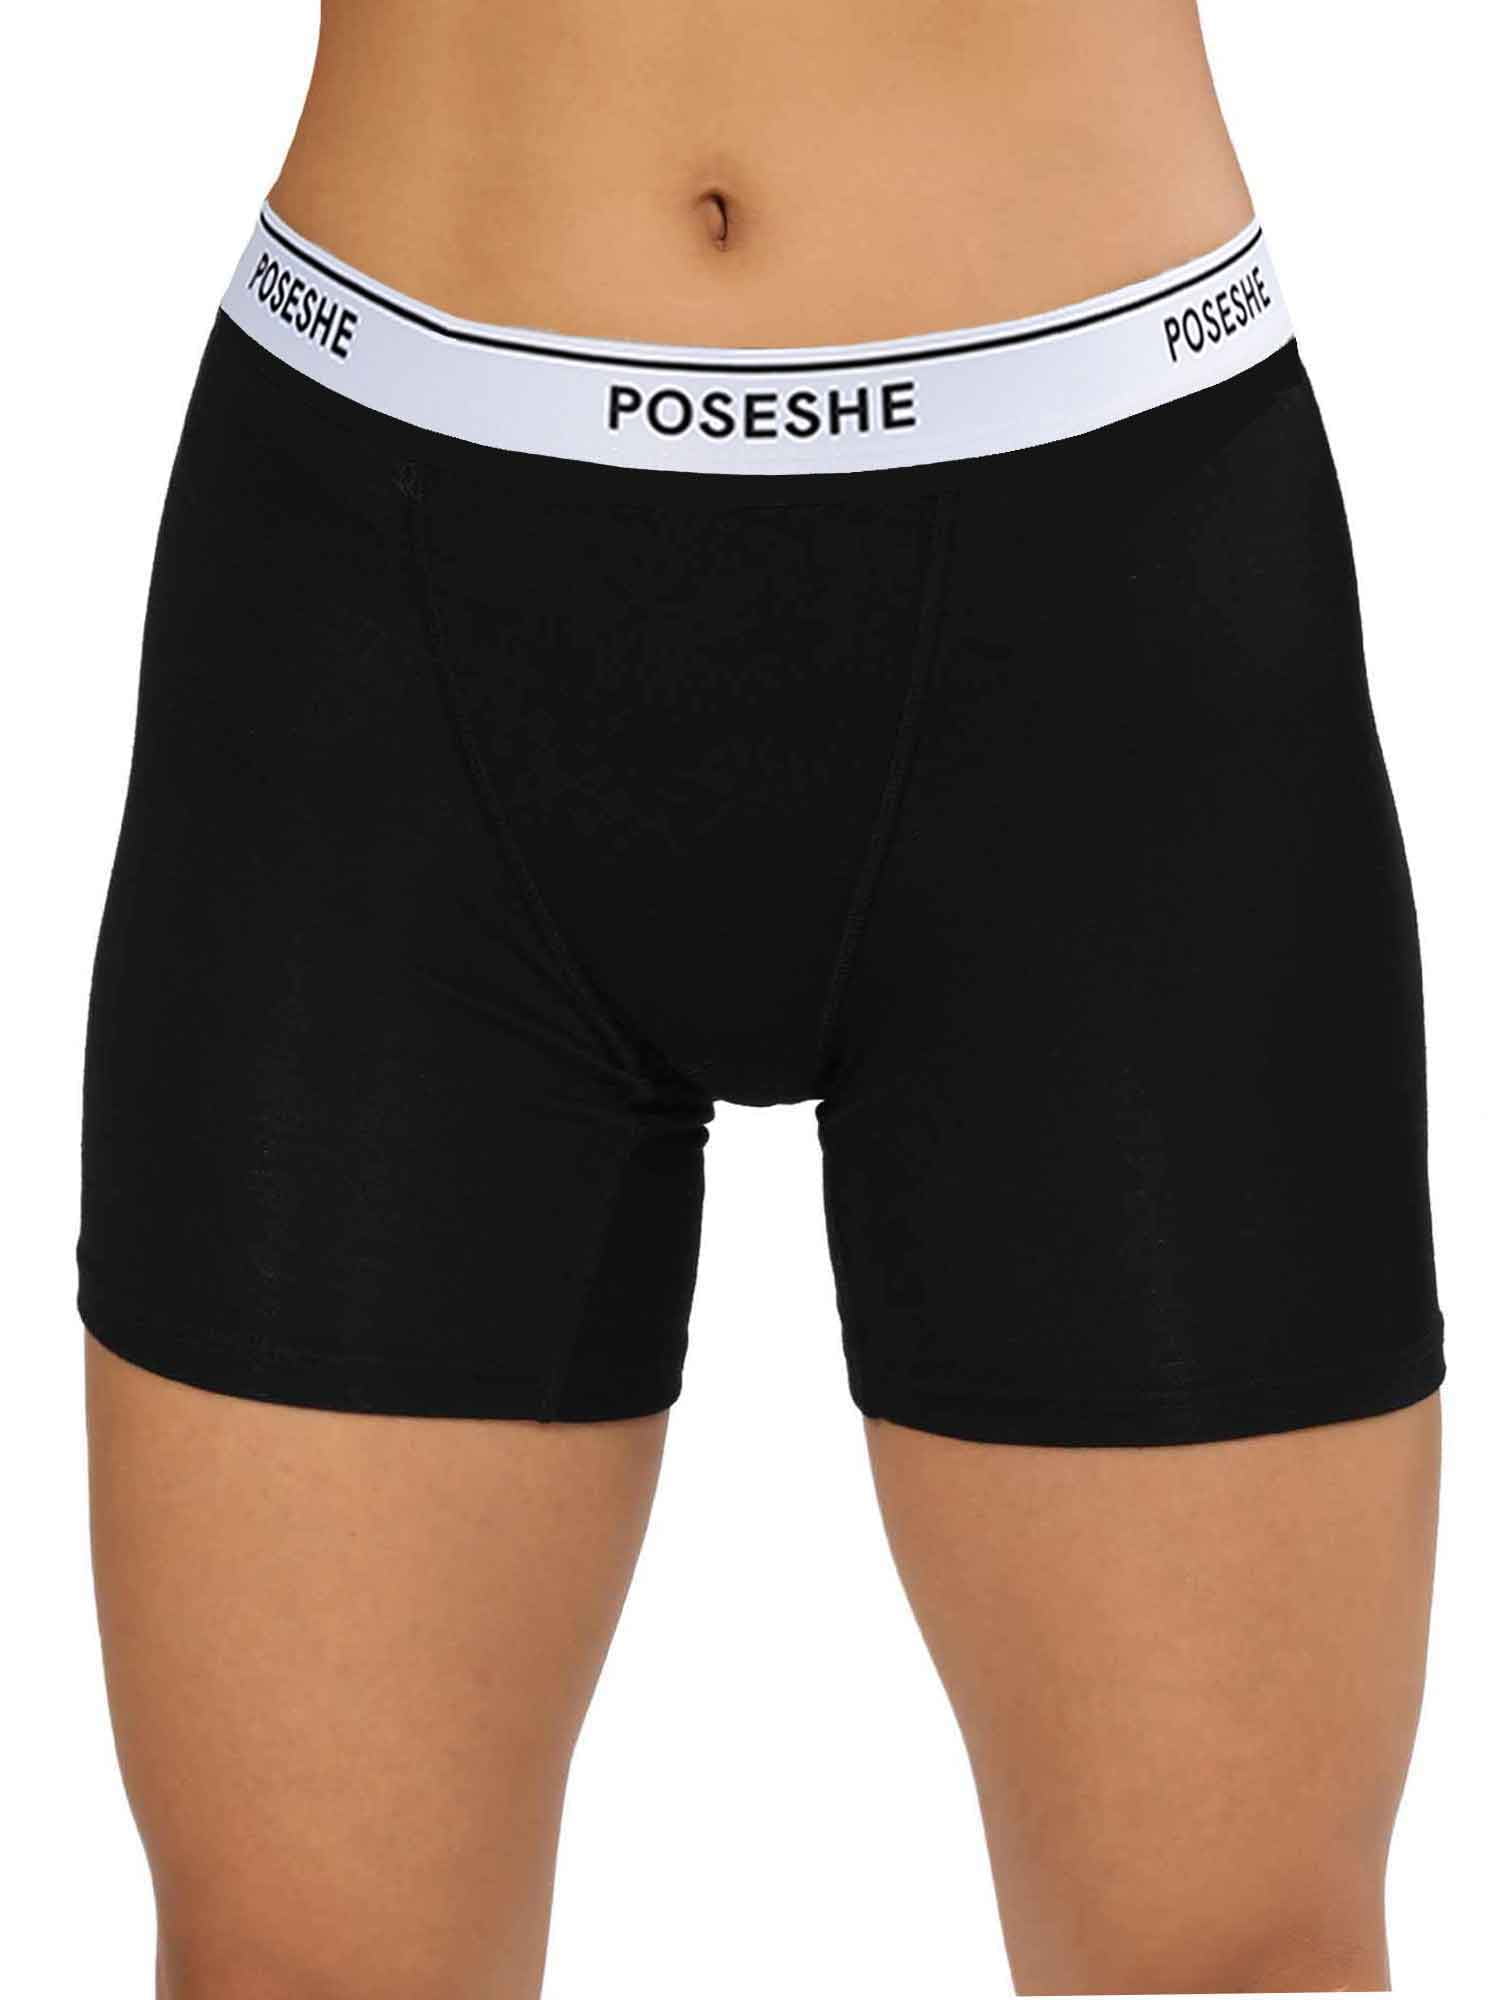 POSESHE Women's Boxer Underwear, Plus Size Boyshorts Panties 6/8 ...